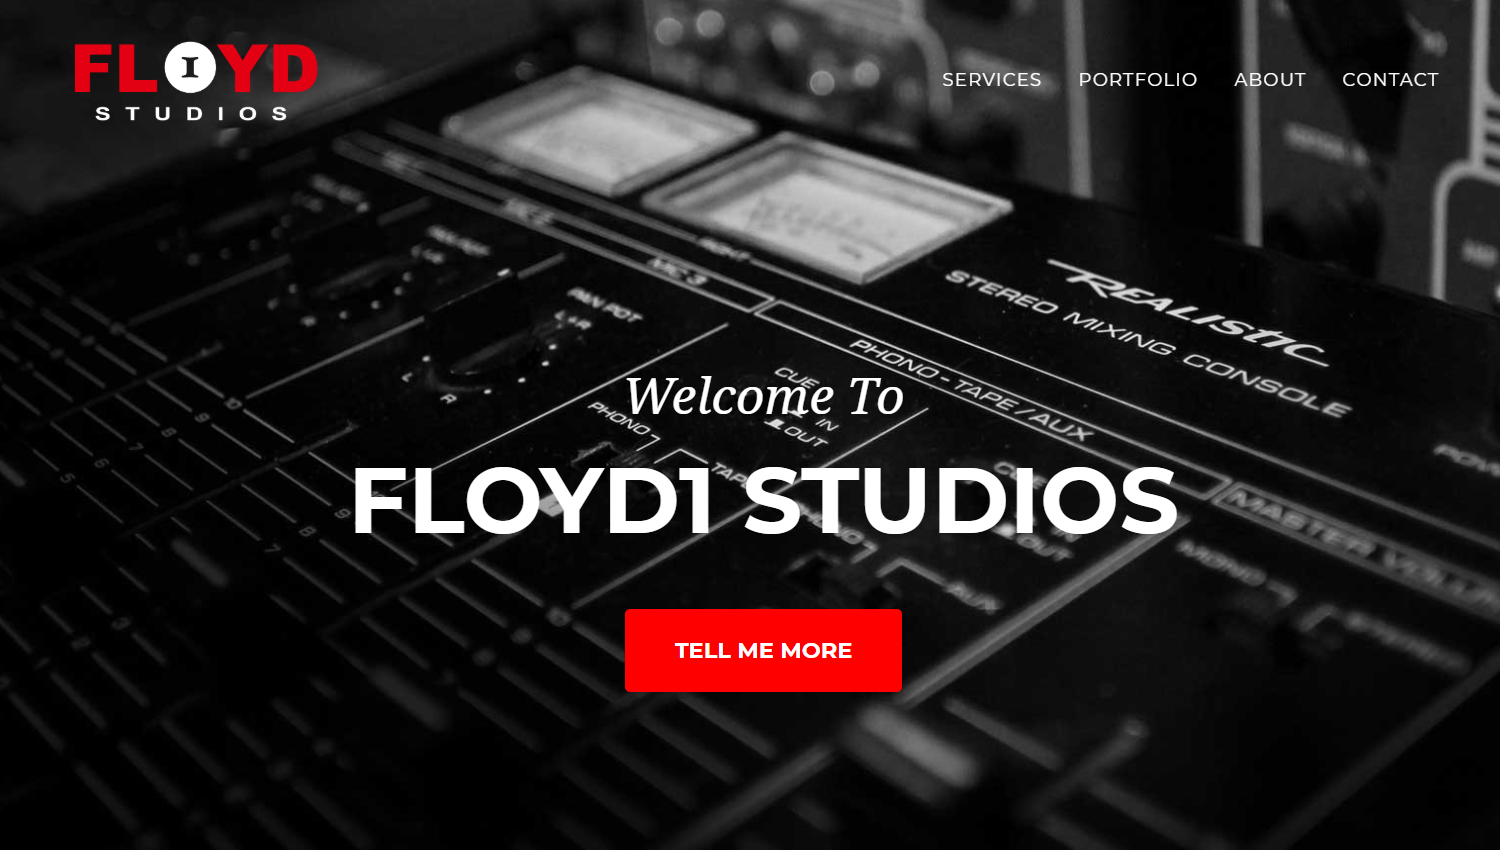 Floyd 1 Studios